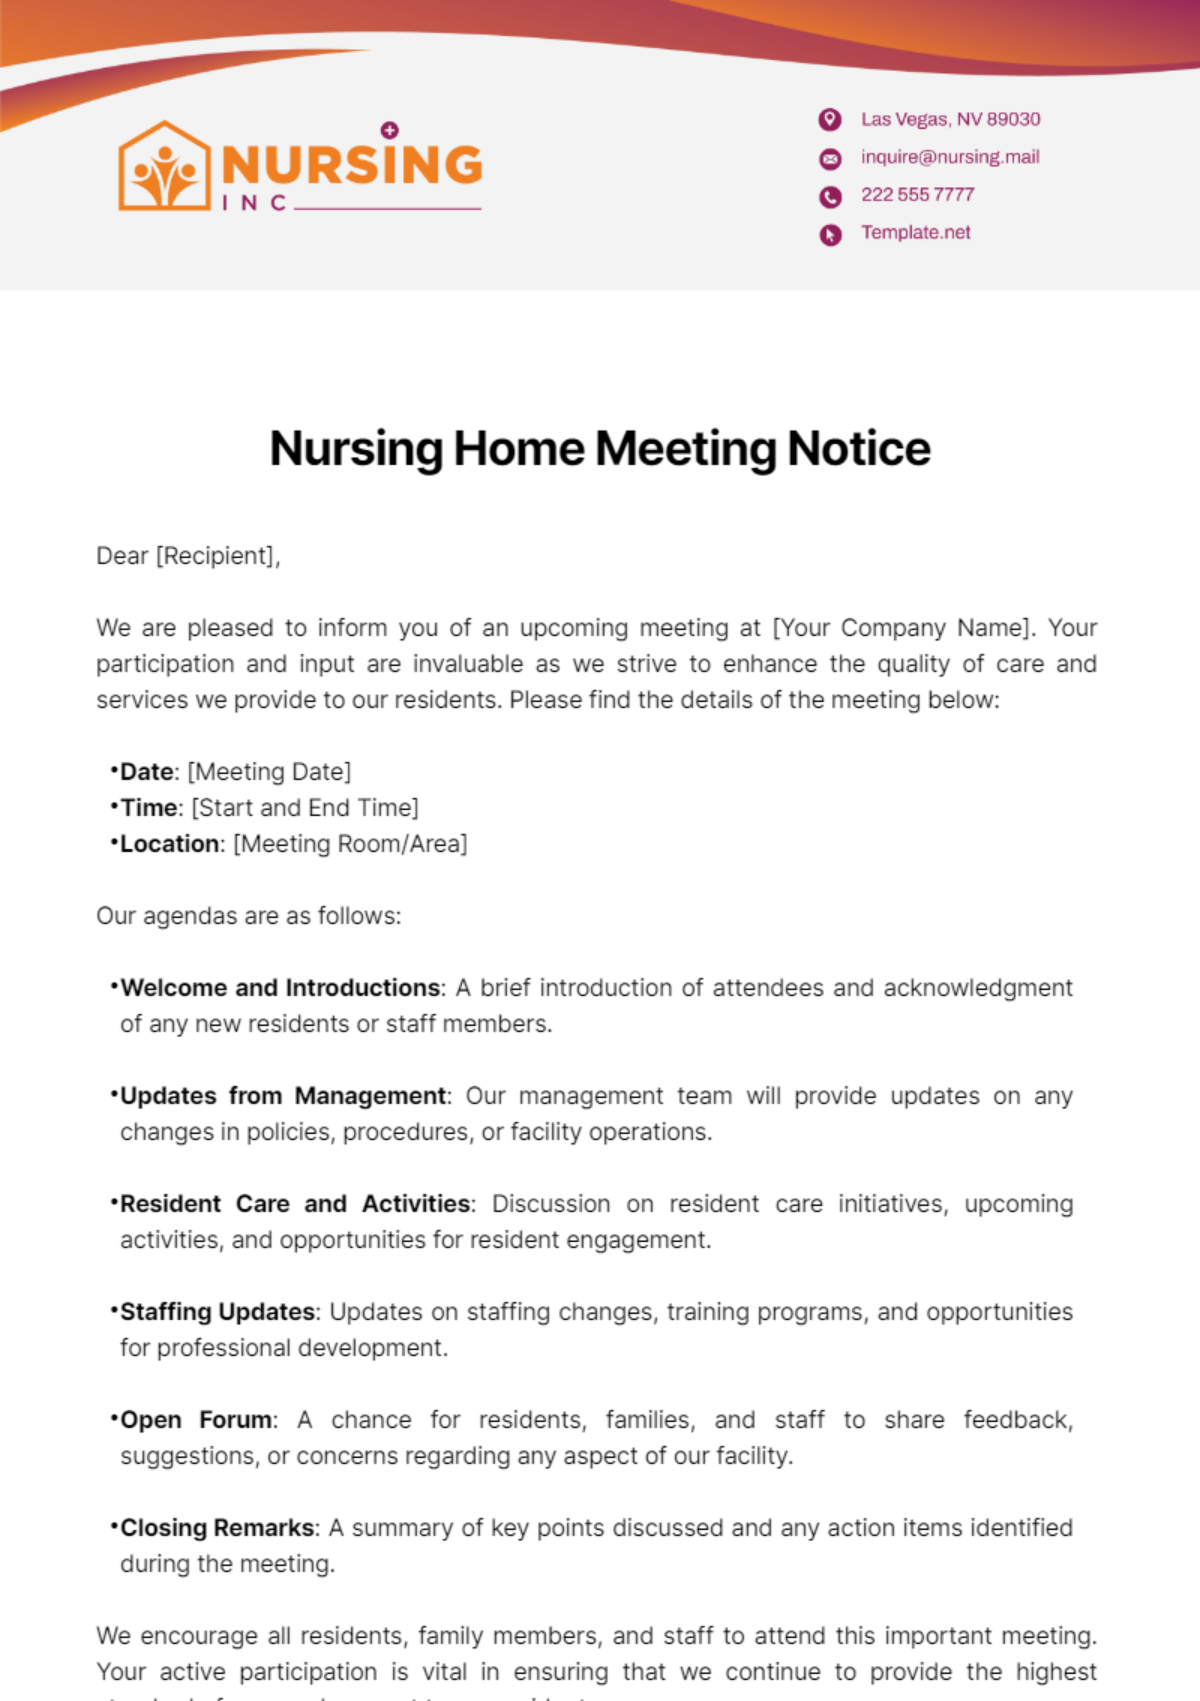 Nursing Home Meeting Notice Template